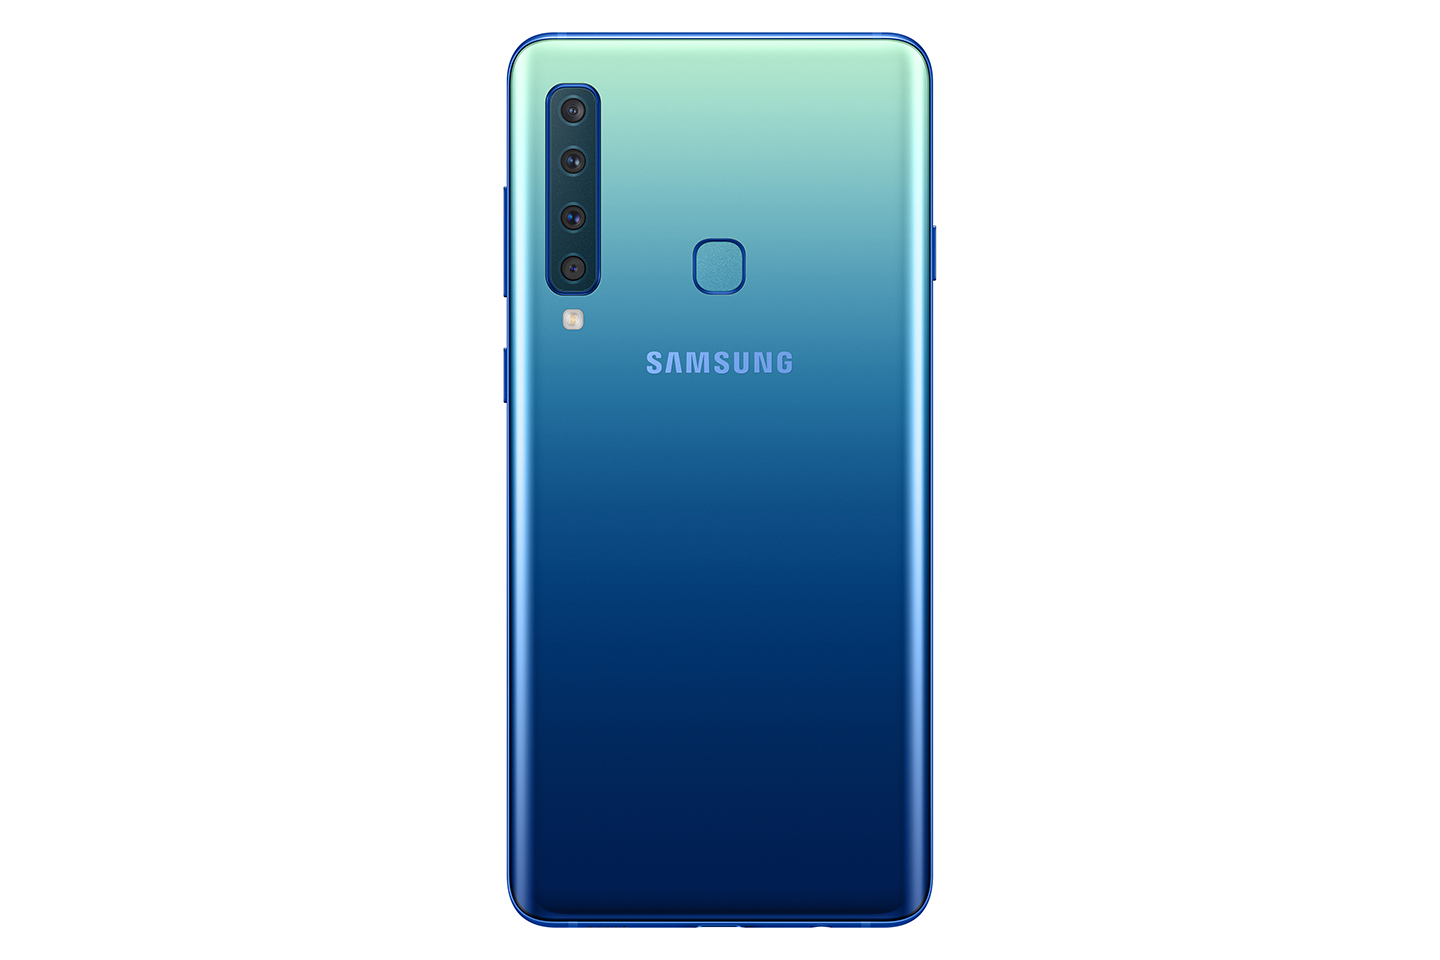 59d33 SM A920F 002 Back Lemonade2BBlue - Samsung presenta Galaxy A9 e Galaxy A7